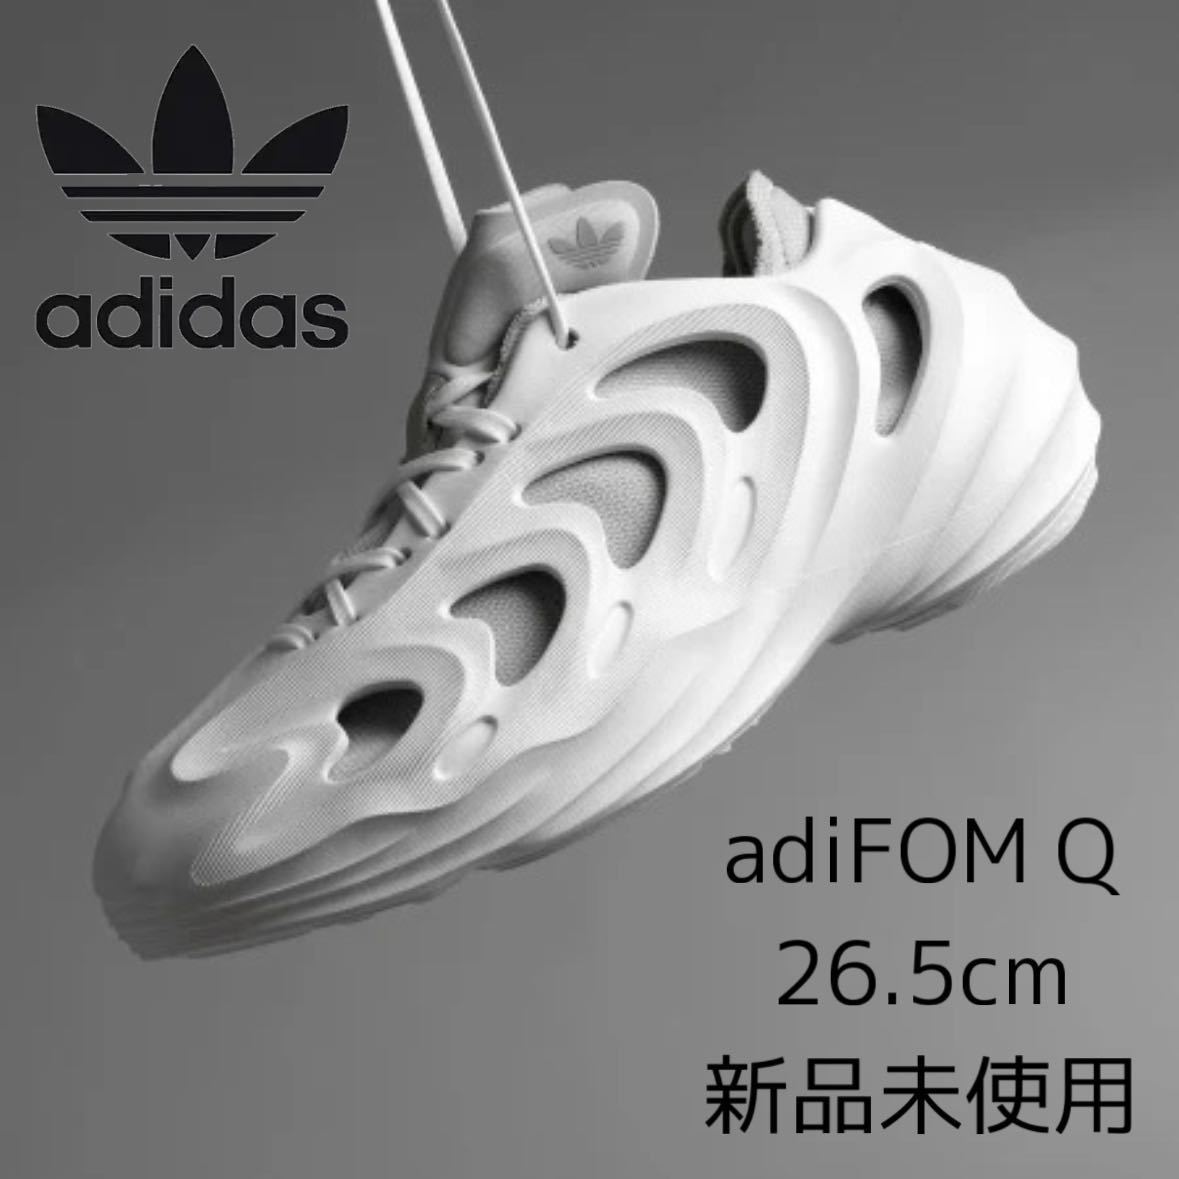 26.5cm 新品 adiFOM Q 正規品 adidas originals アディフォーム アディフォム アディダスオリジナルス yeezy イージー FOAM RUNNER カニエ_画像1